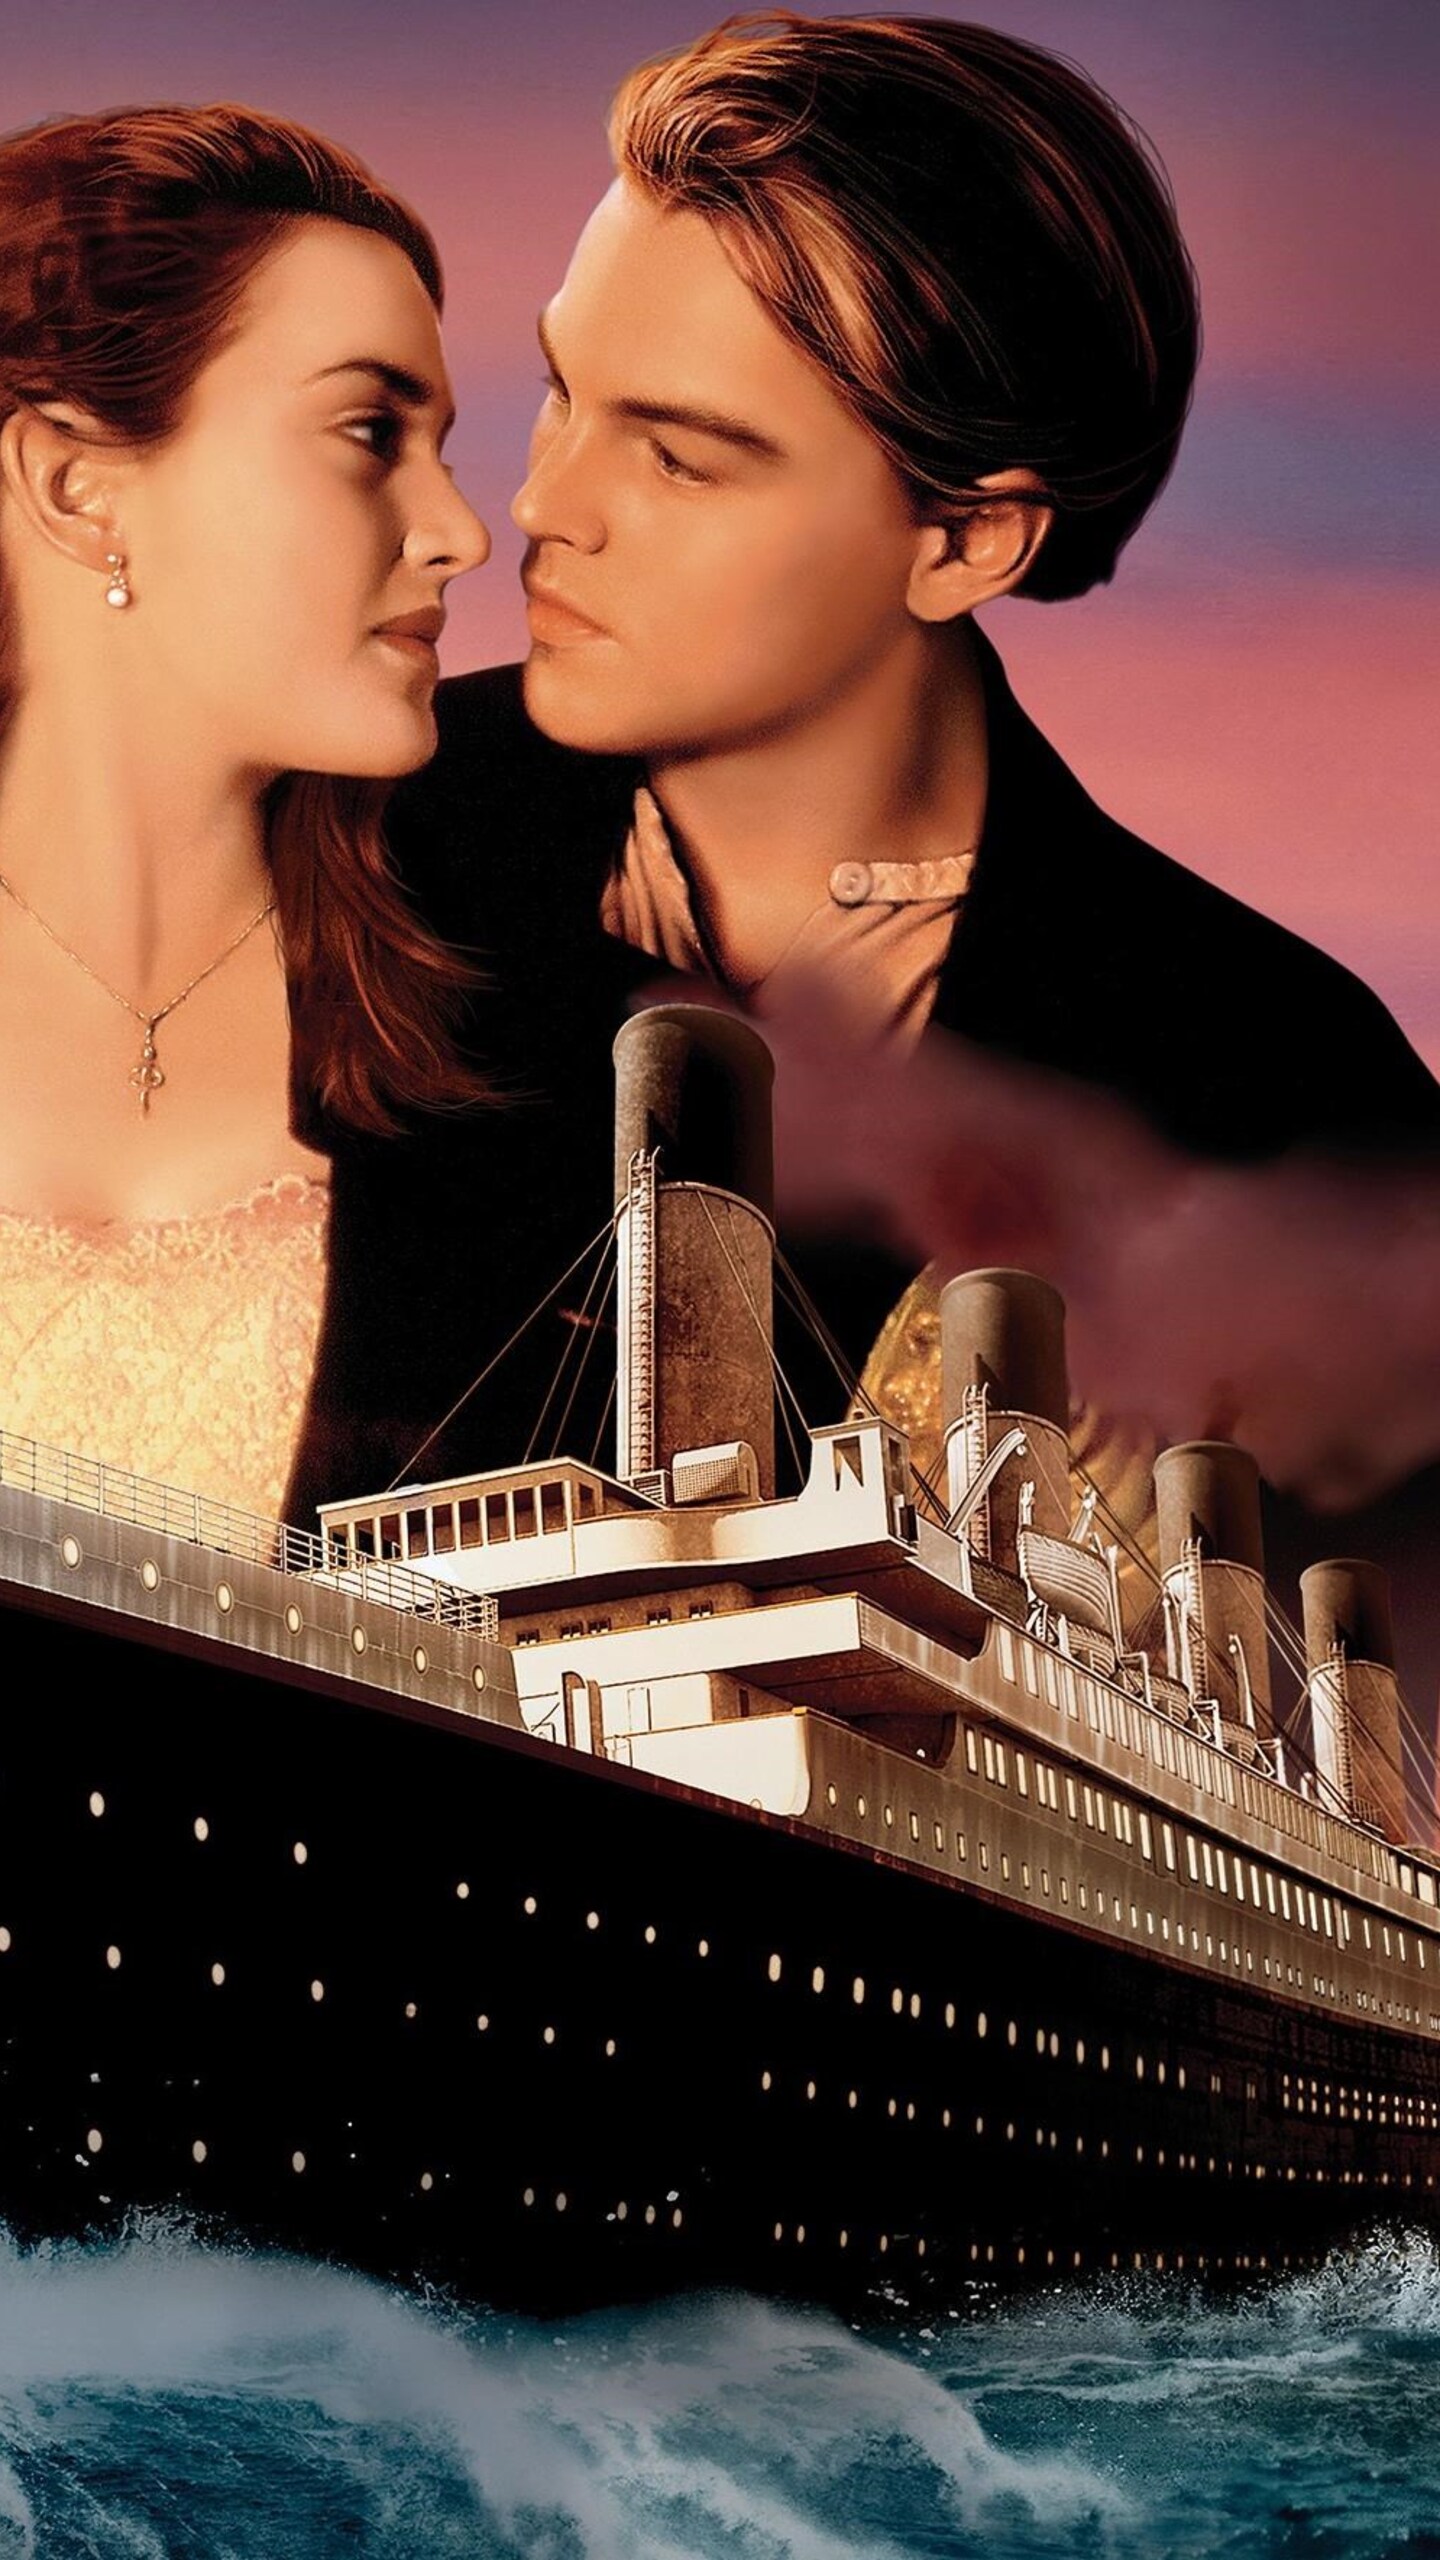 cam delgado recommends titanic full movie downloads pic